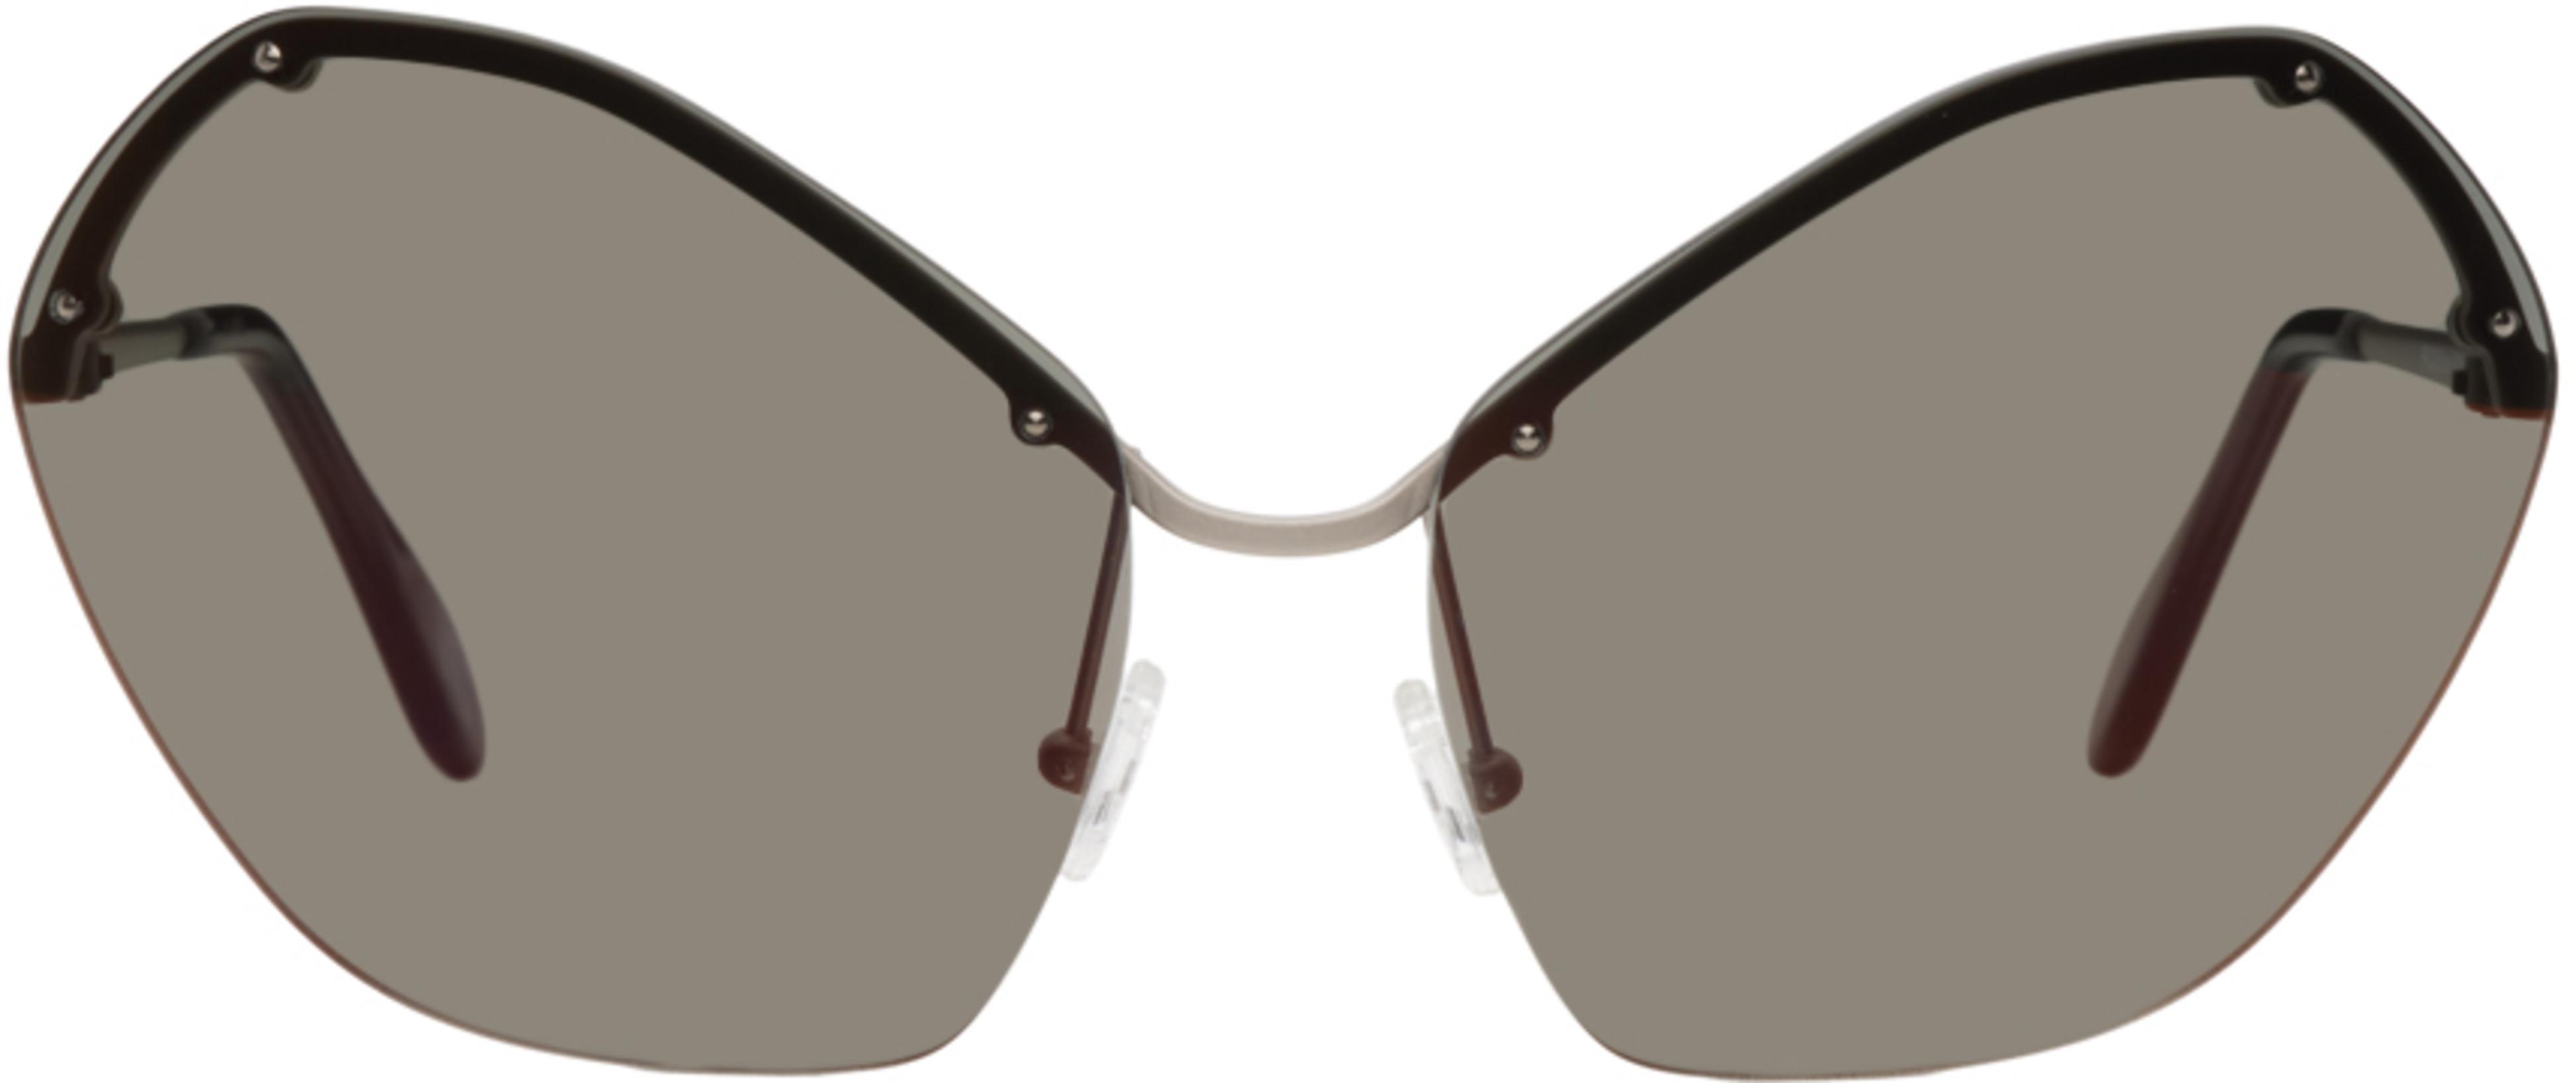 Gray Precious Sunglasses by KNWLS